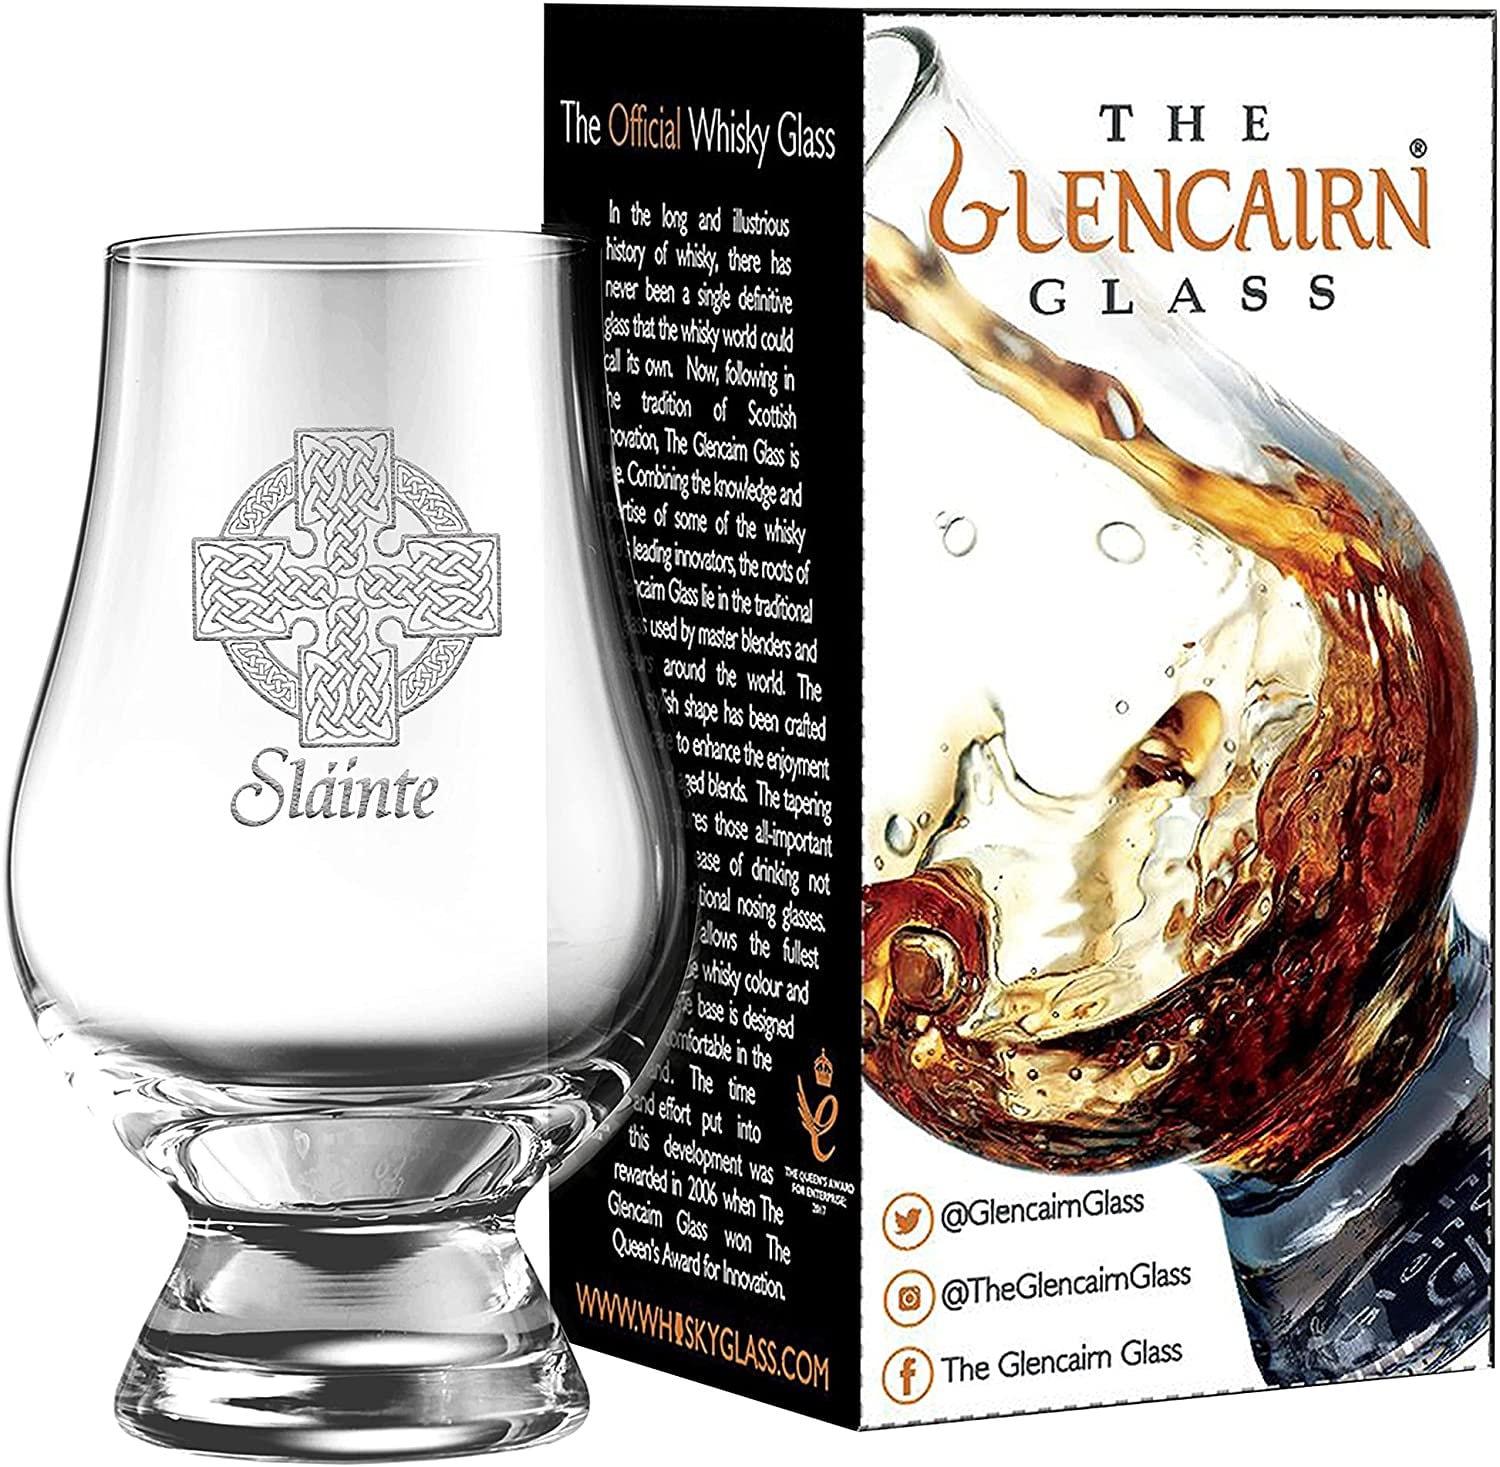 DEOUNY Crystal Whiskey Glasses For Drinking Bourbon Cognac Irish Whisky  Large Premium Lead-Free Glass Tasting Cups Bar Drinkware